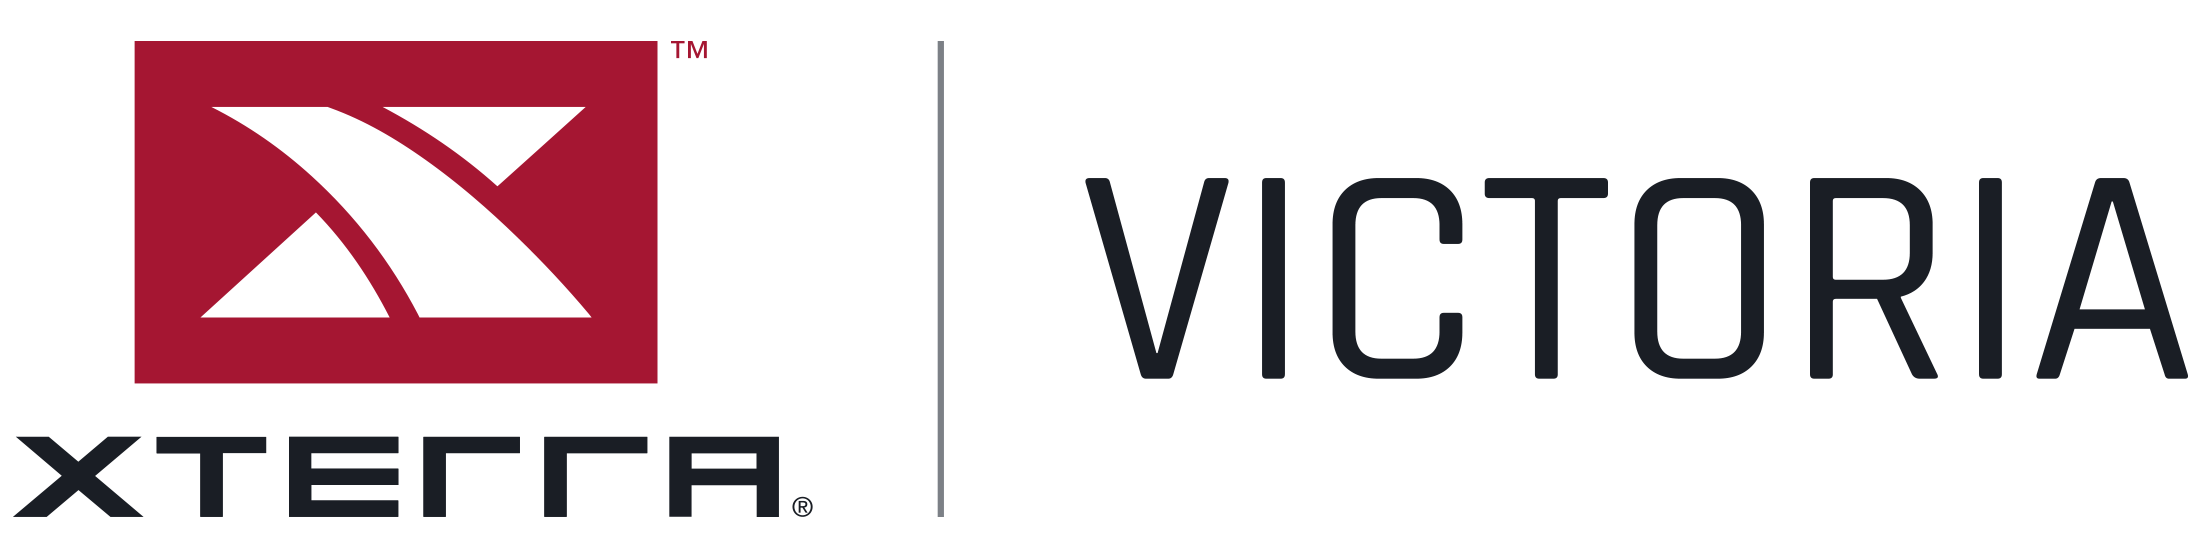 XTERRA Victoria logo.